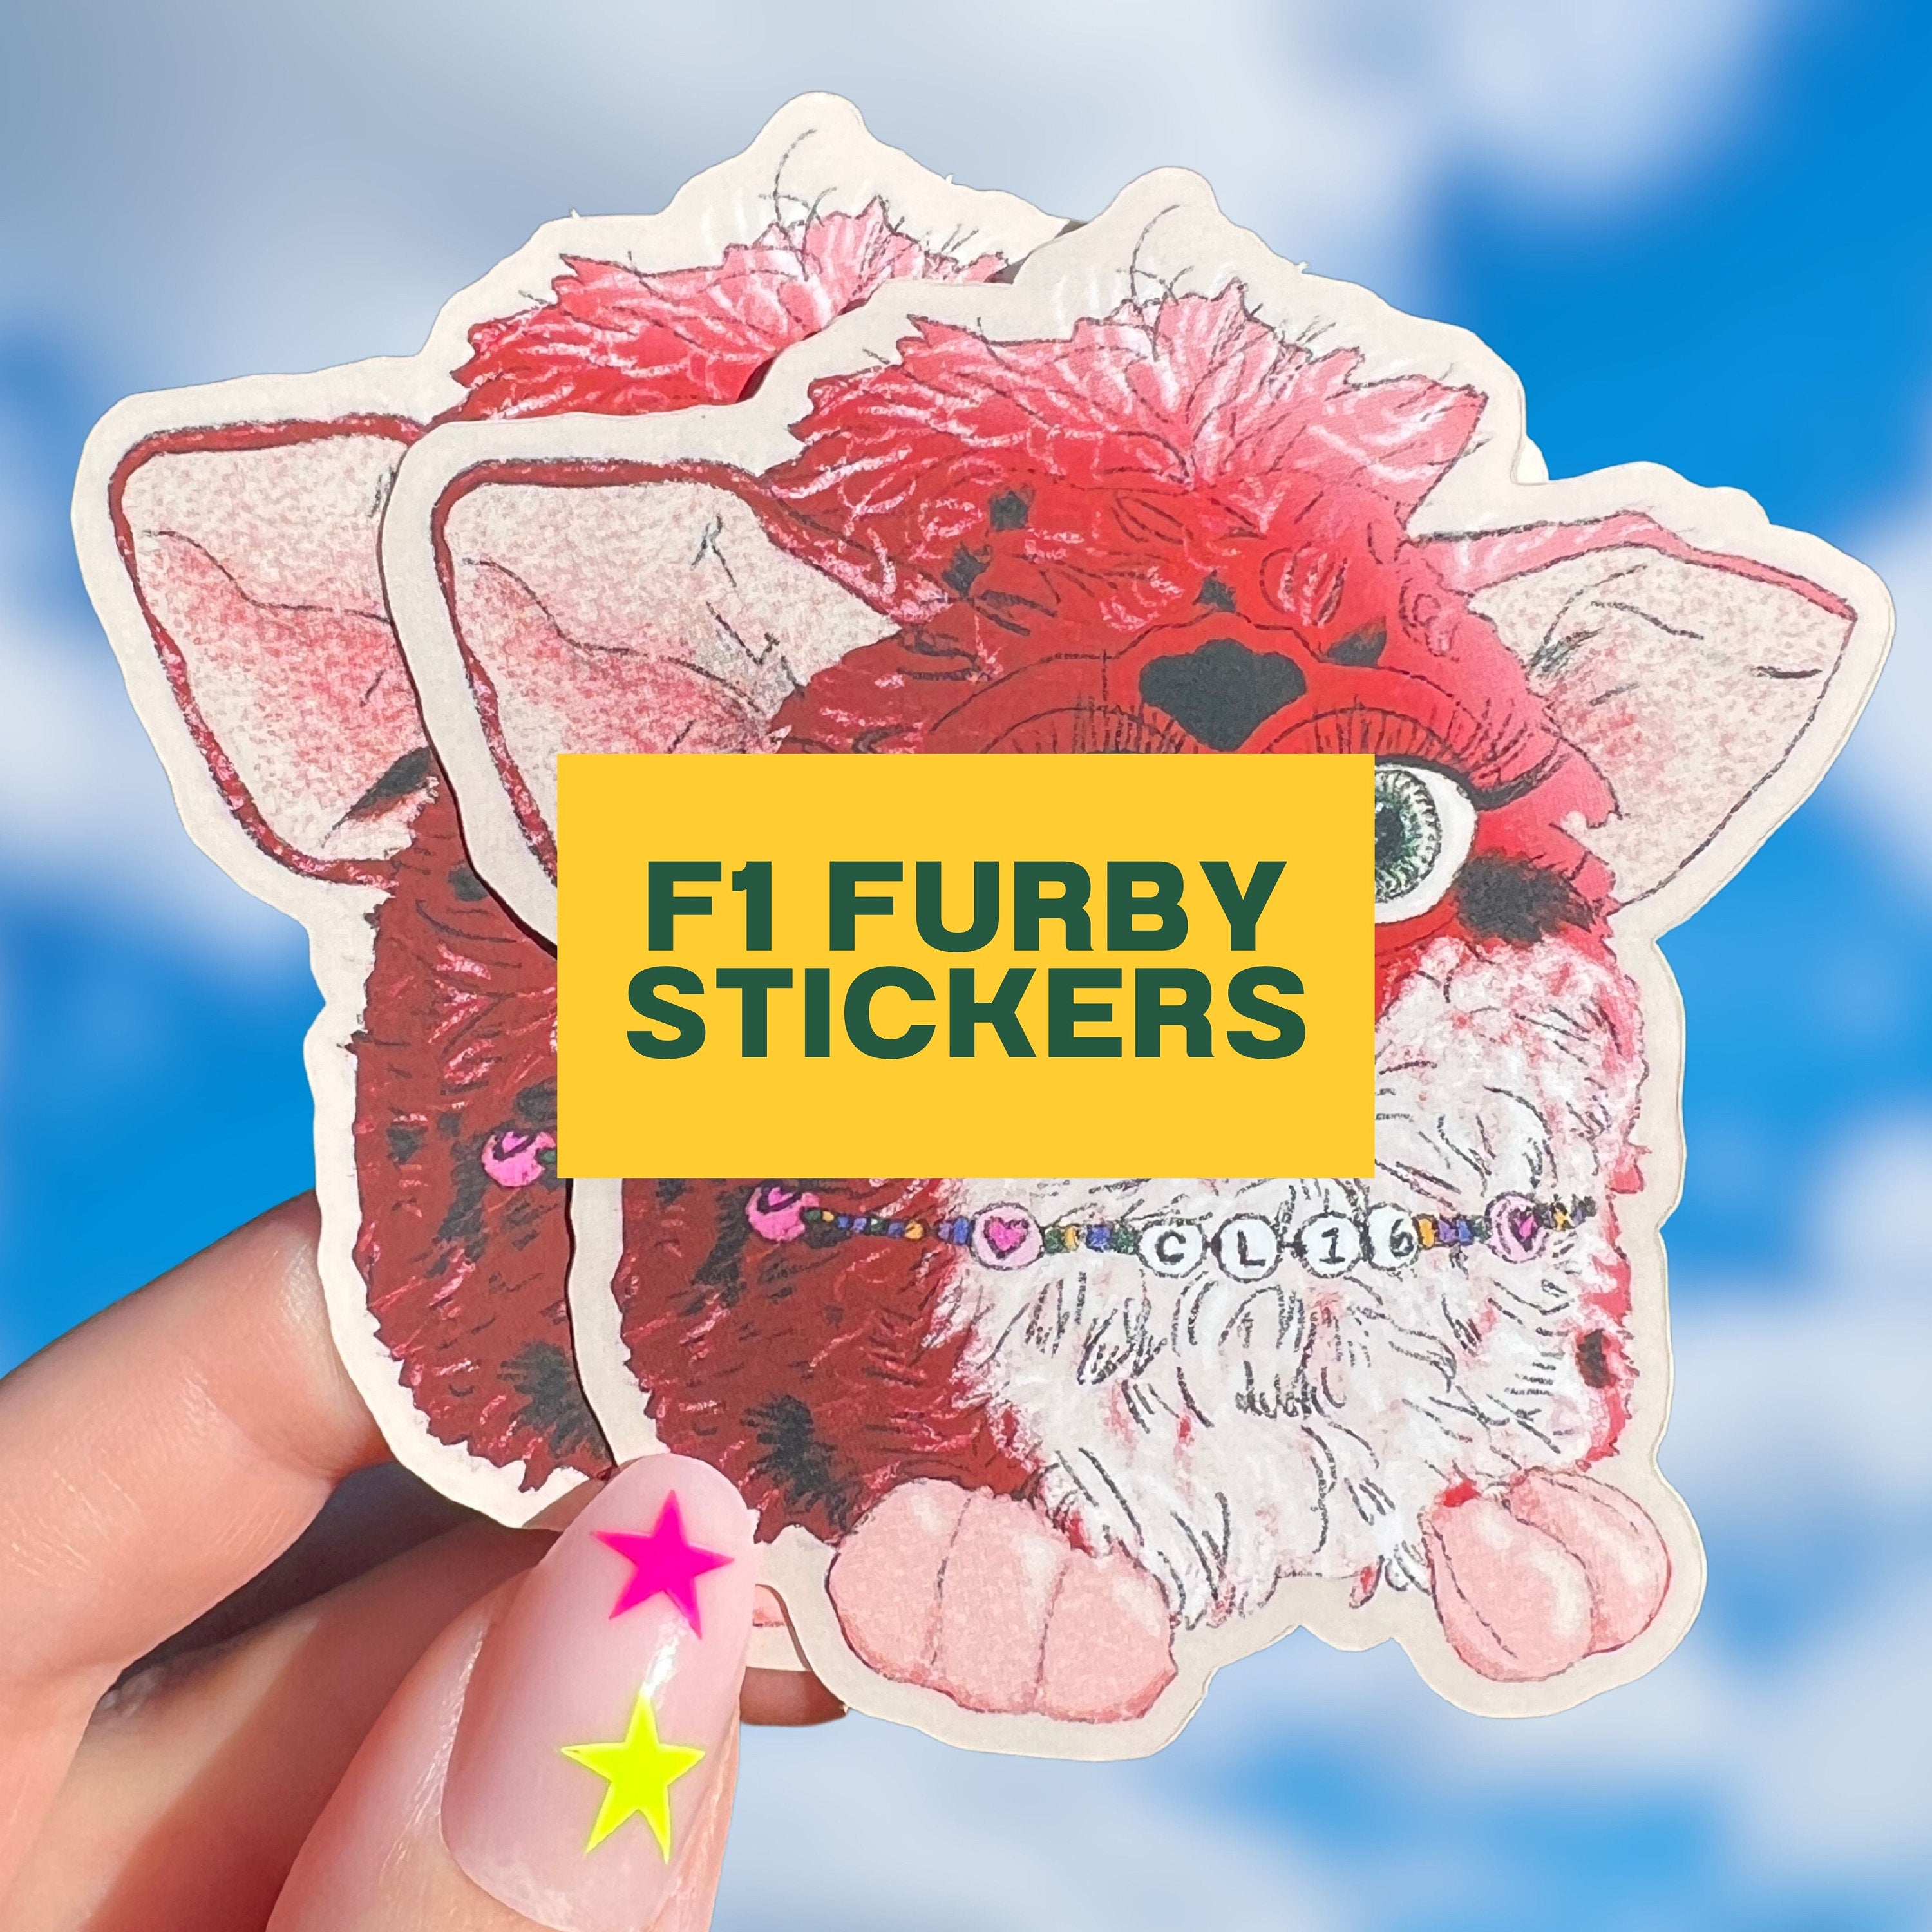 F1 Furby stickers